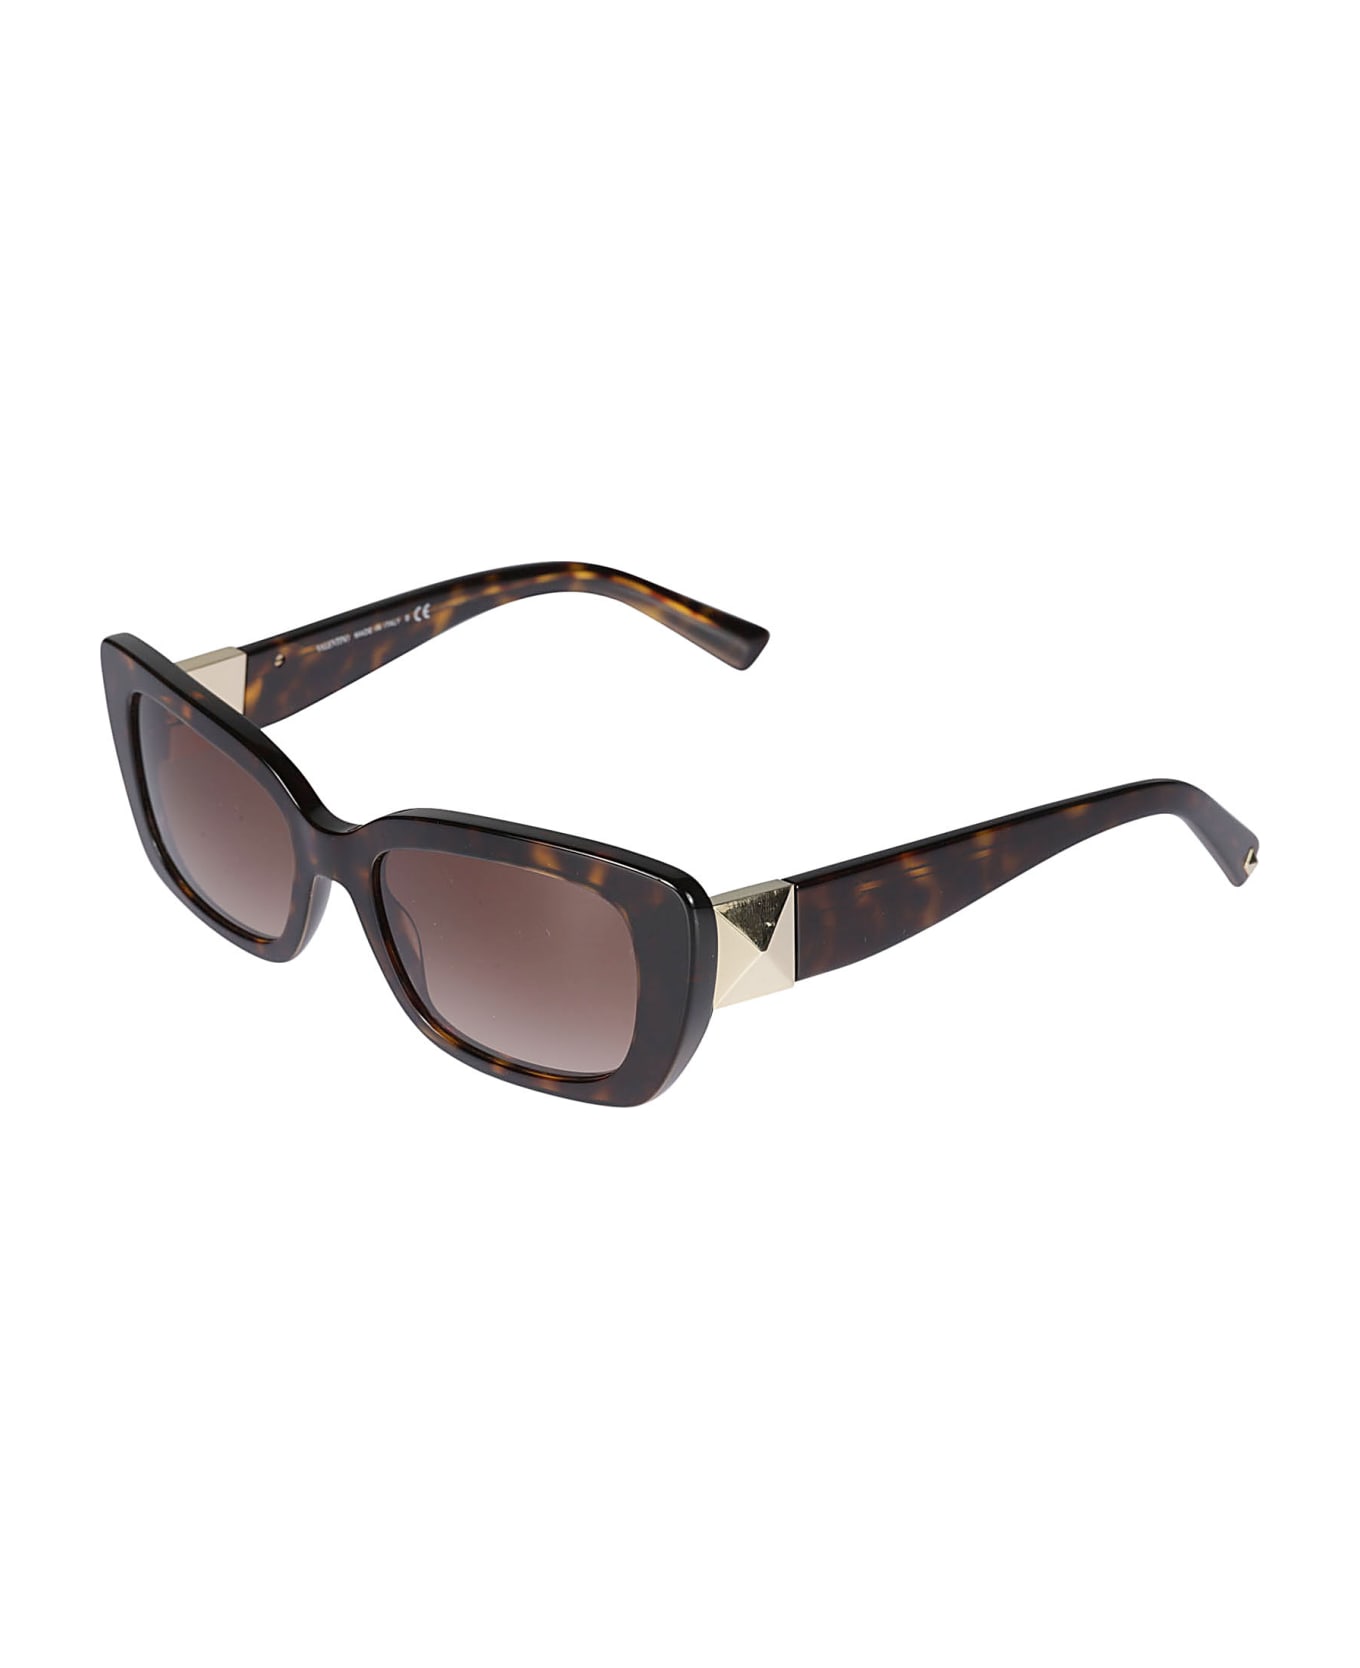 Valentino Eyewear Sole500213 Sunglasses - 500213